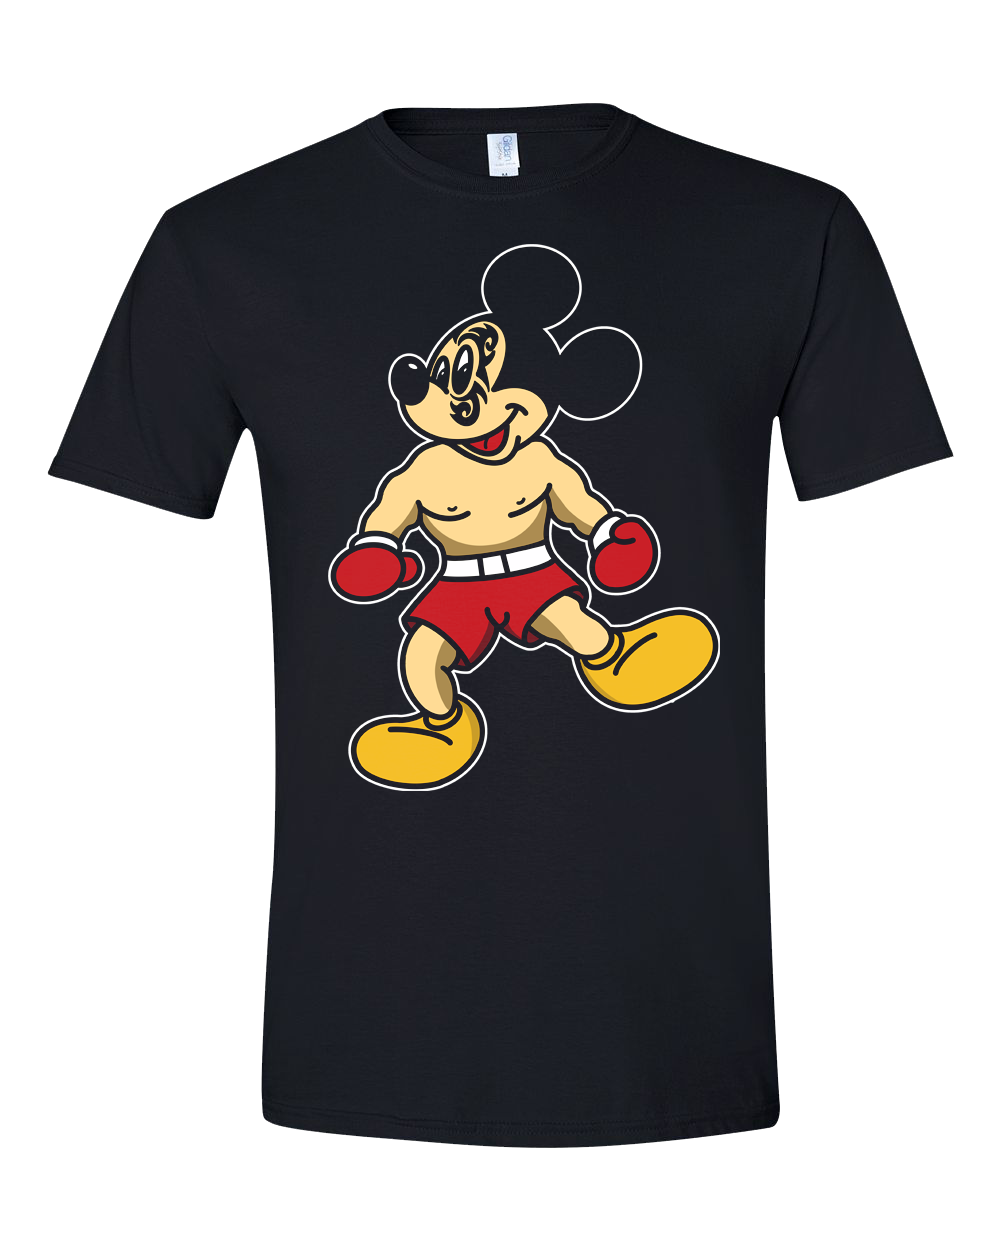 KHP “Mickey Tyson” Unisex T-Shirt